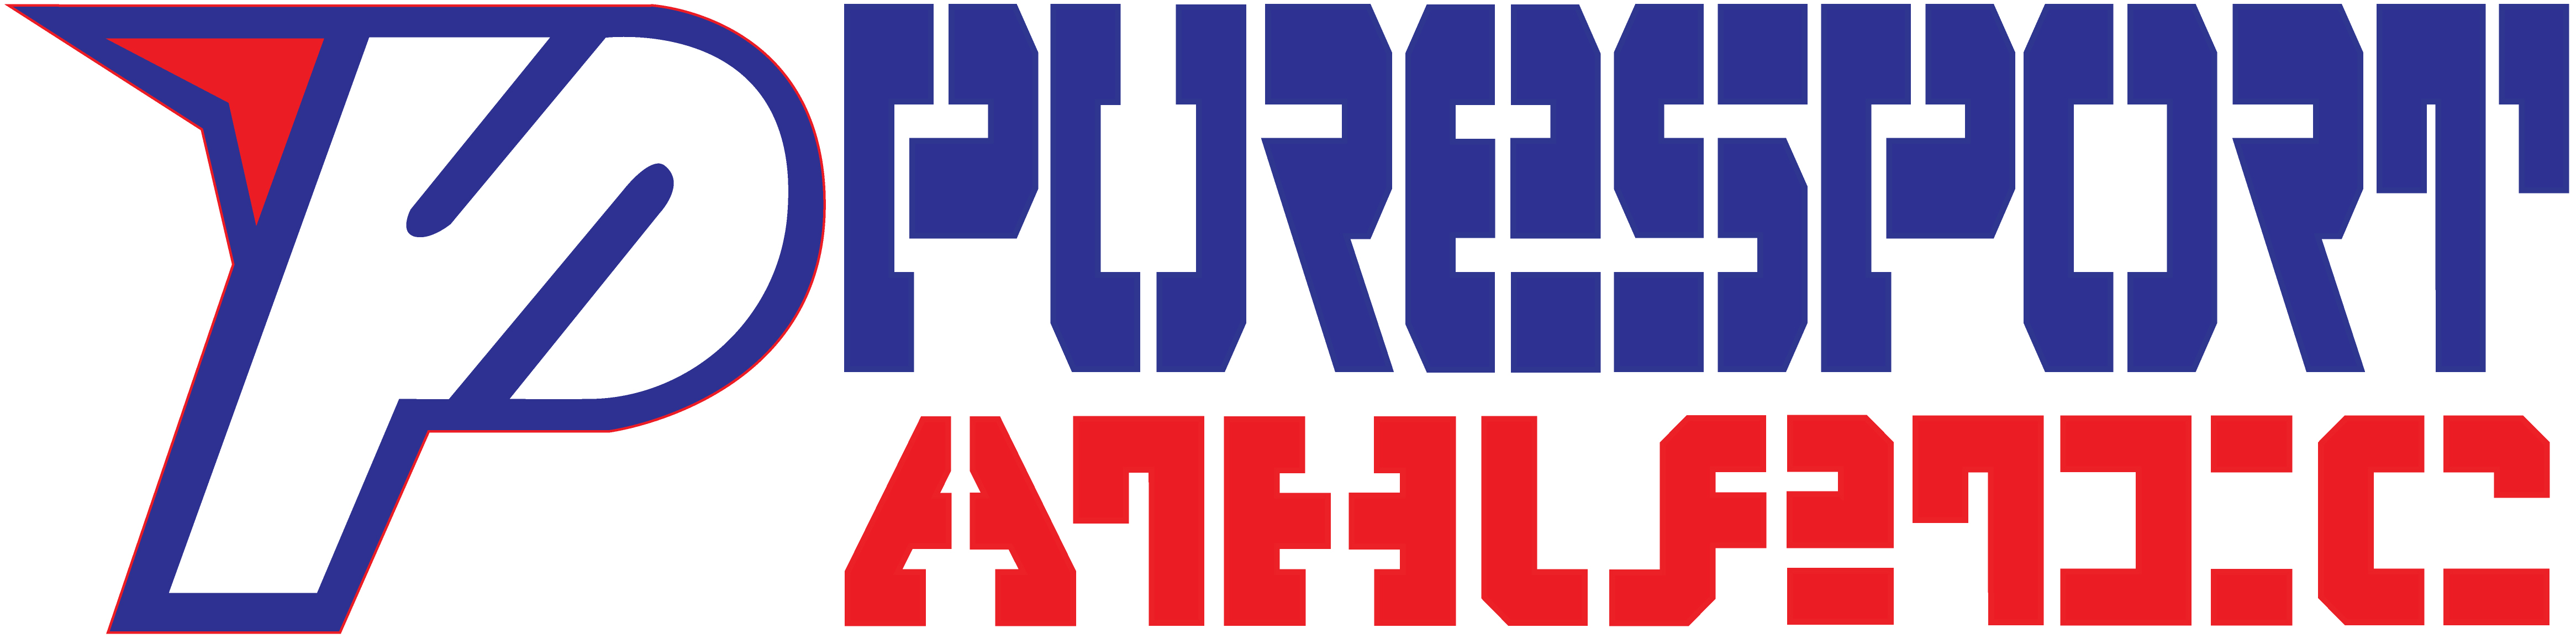 PURESPORT ATHLETIC LLC